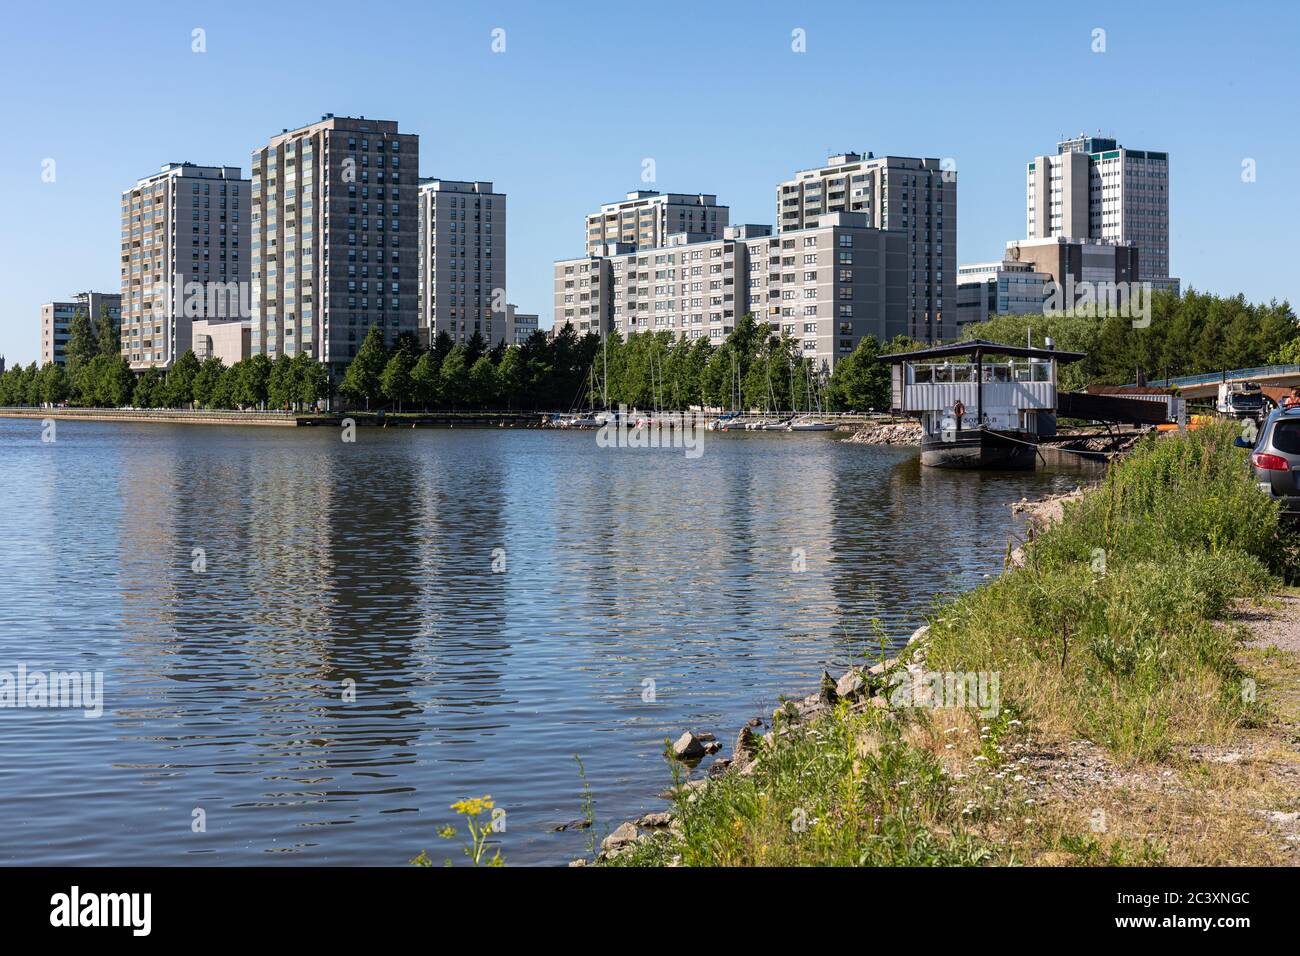 Merihaka residential district by the sea in Helsinki, Finland Stock Photo